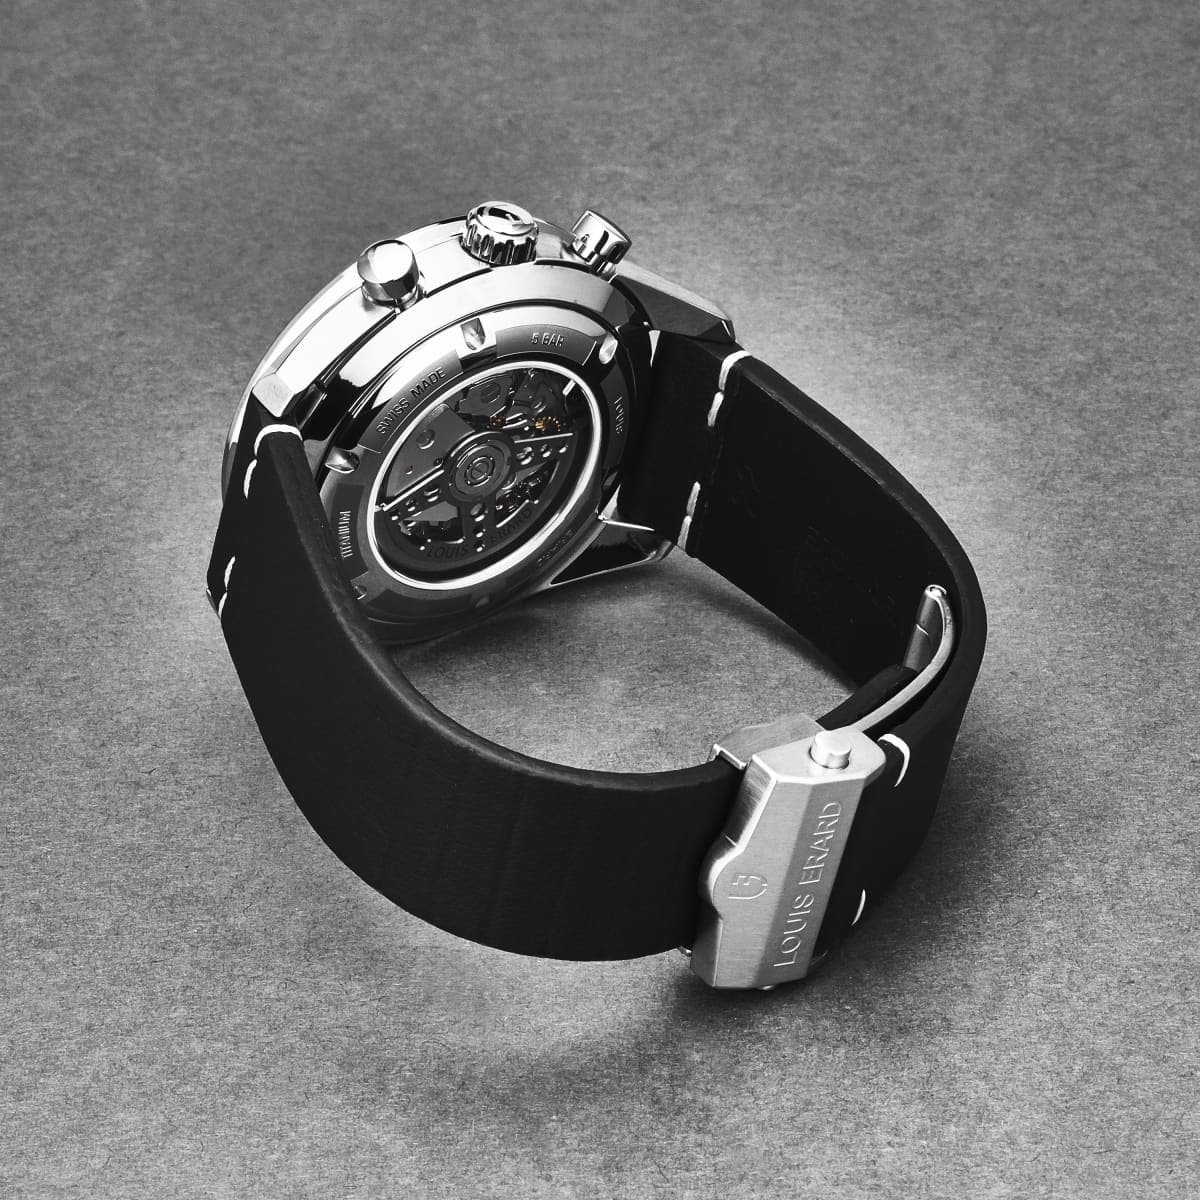 Louis Erard Men’s ’La Sportive’ Chronograph Blue/Black Dial Black Leather Strap Automatic Watch 78119TS05.BVD72 - On 